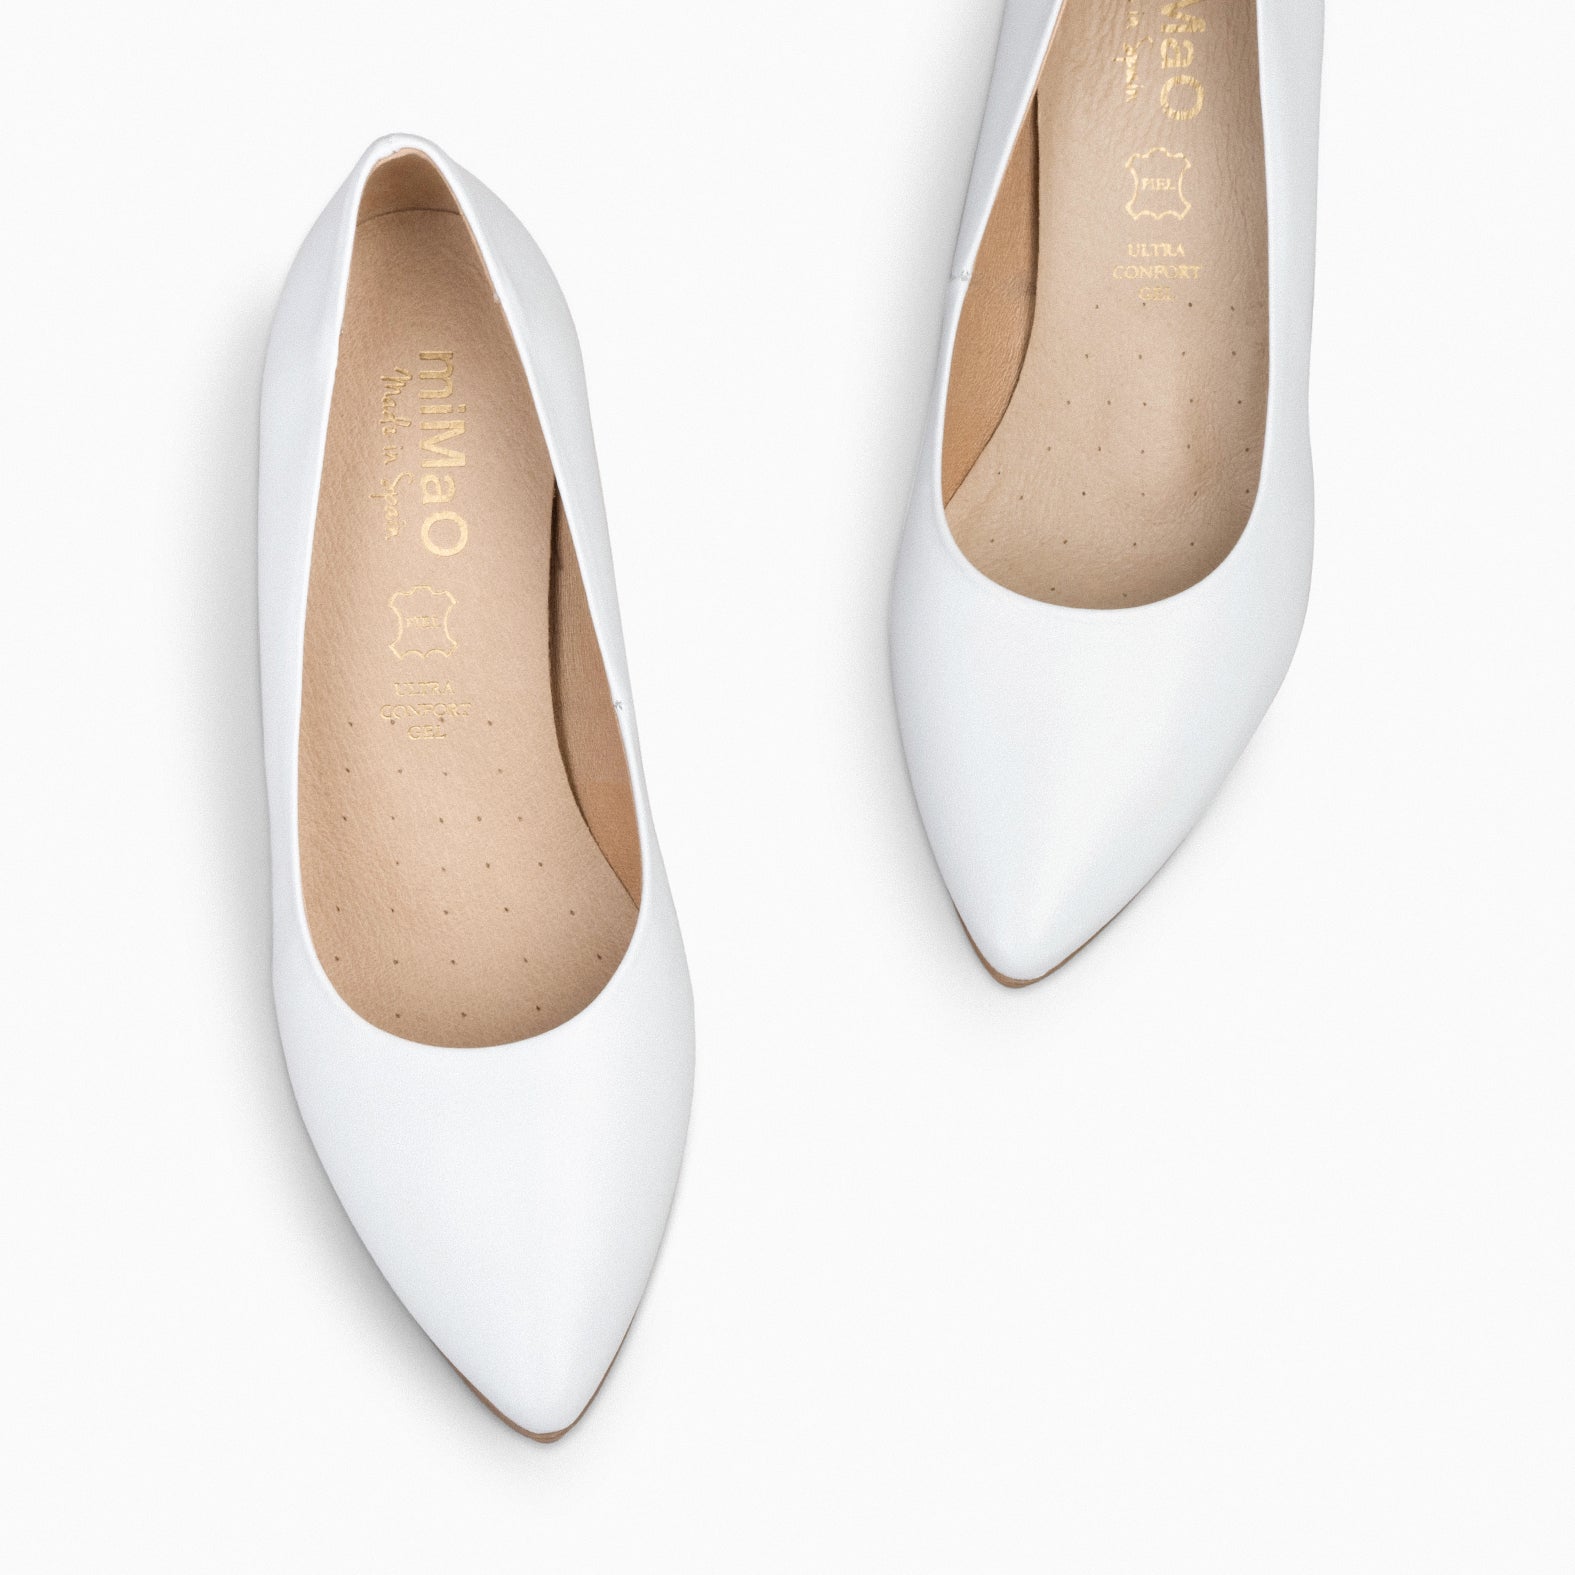 URBAN S SALON – WHITE nappa leather mid heel